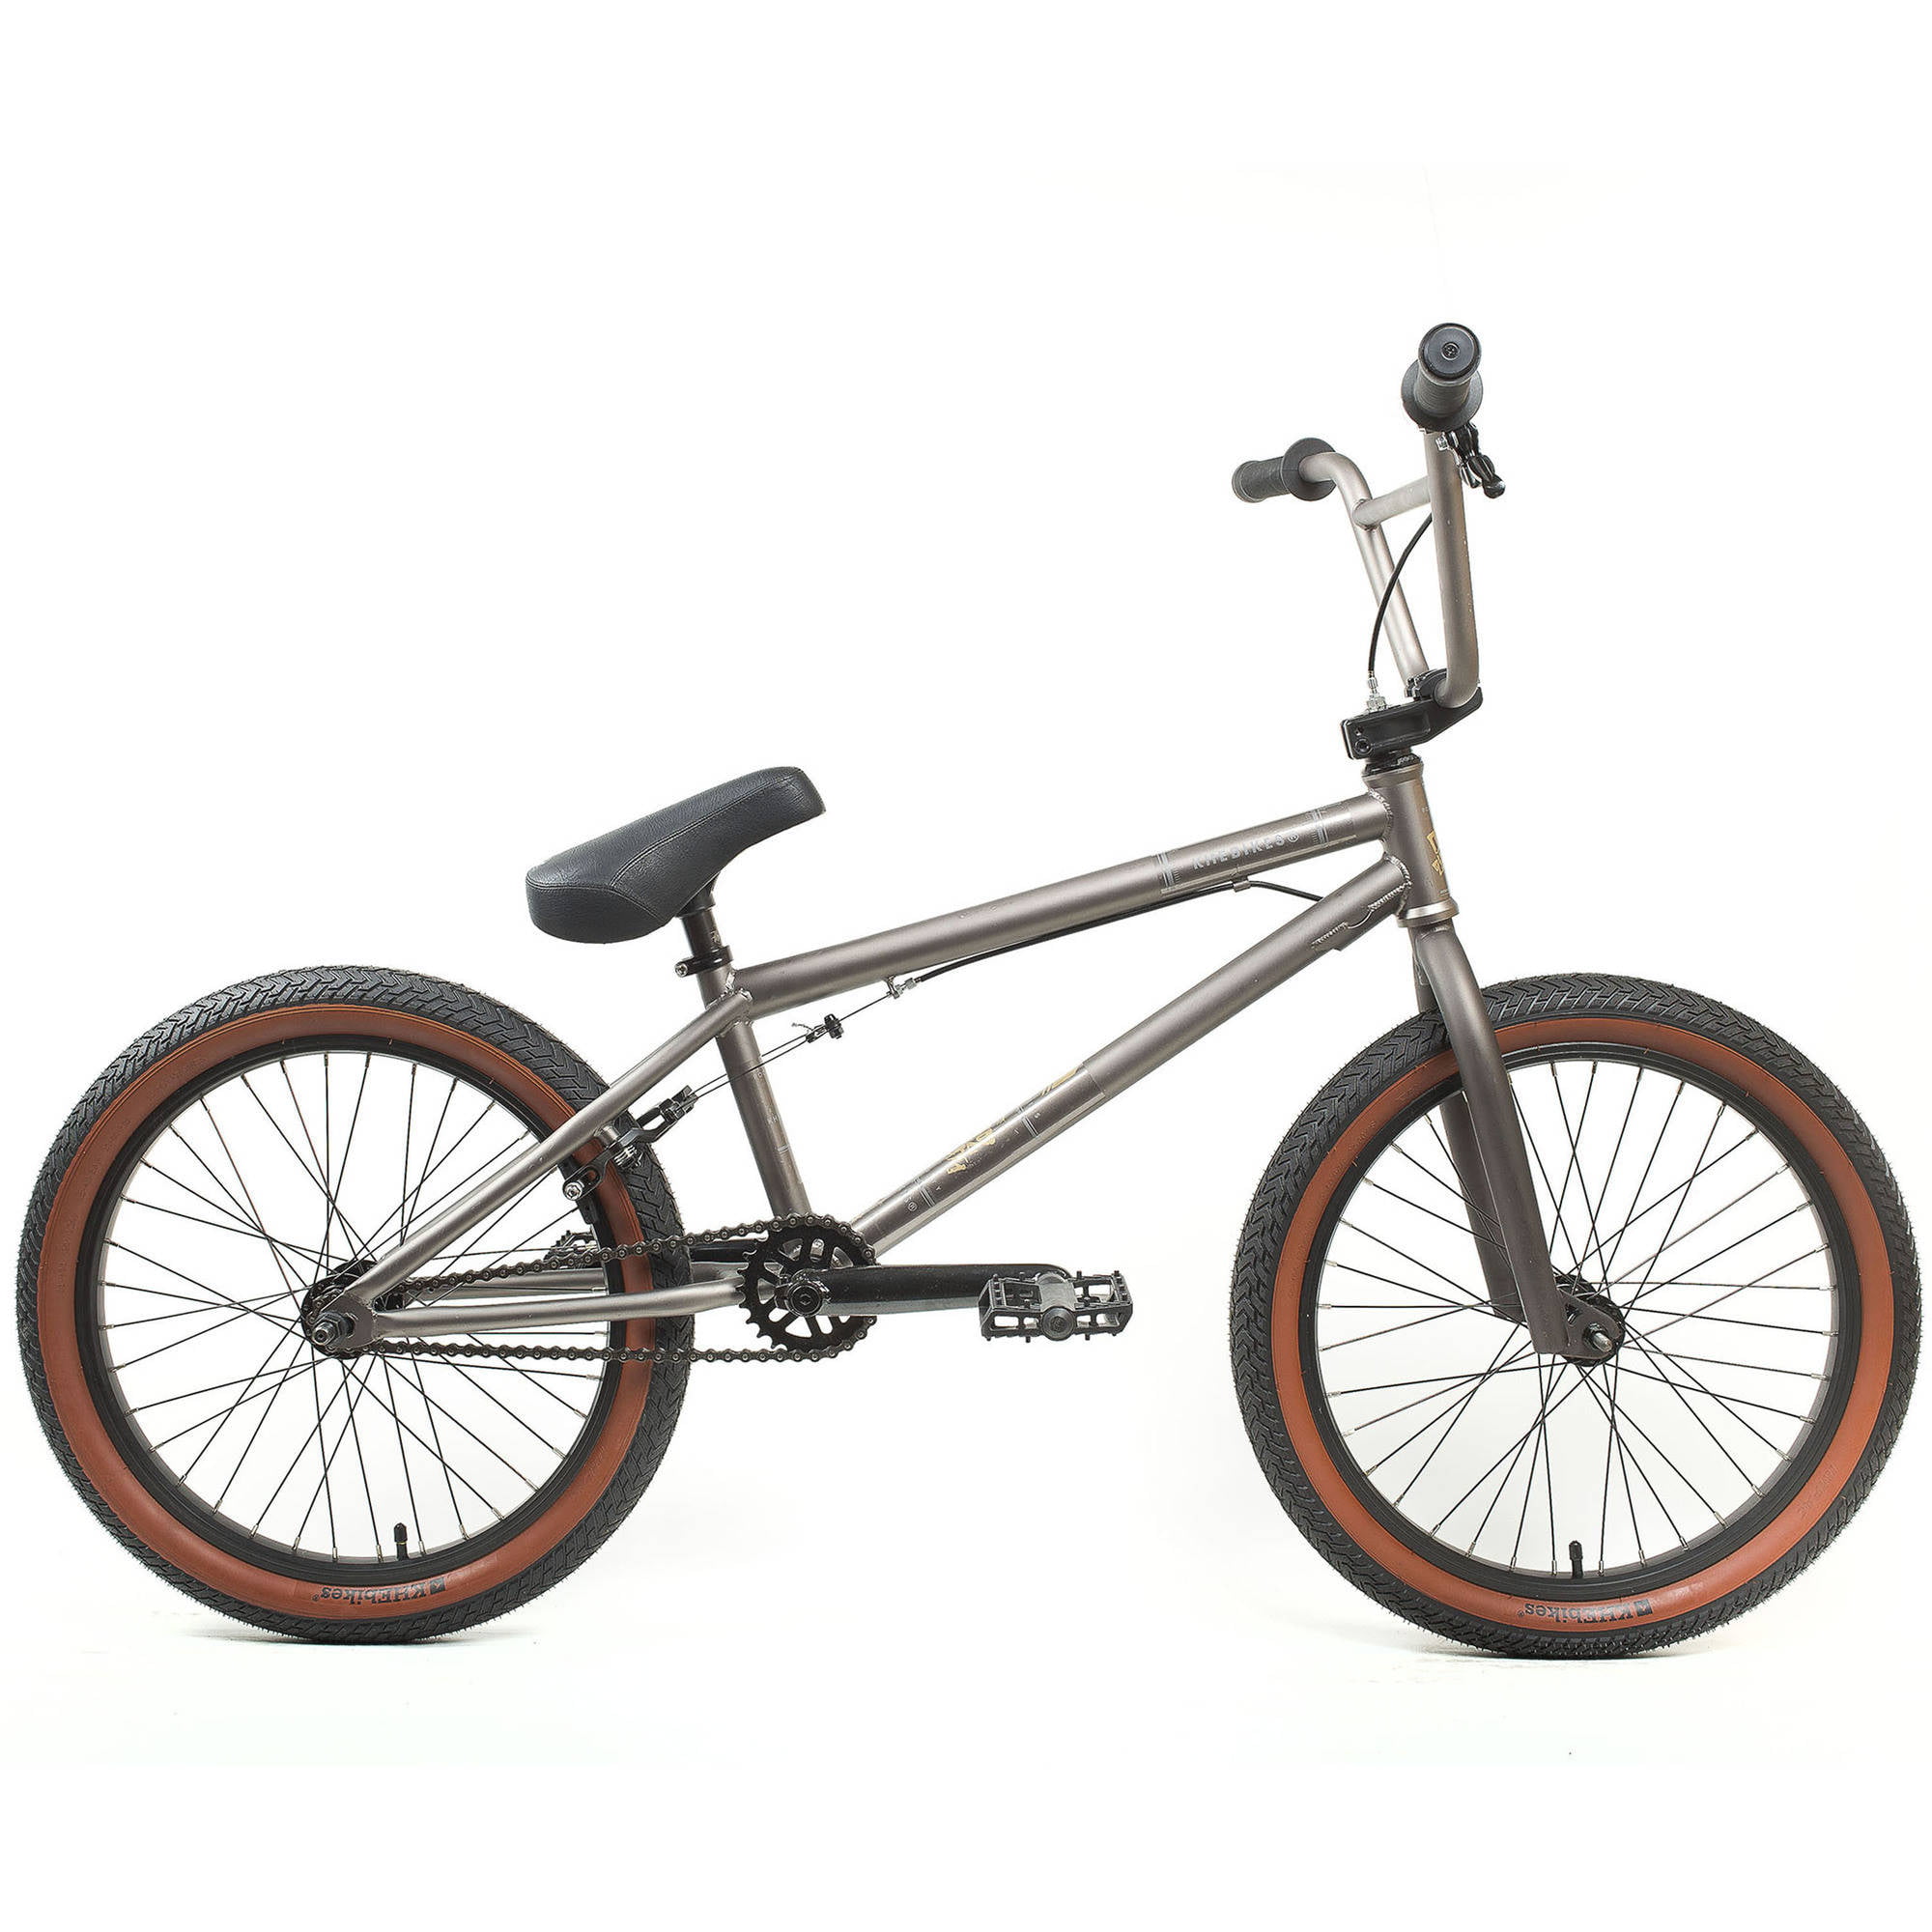 KHE Root 180 BMX Bicycle - Walmart.com 